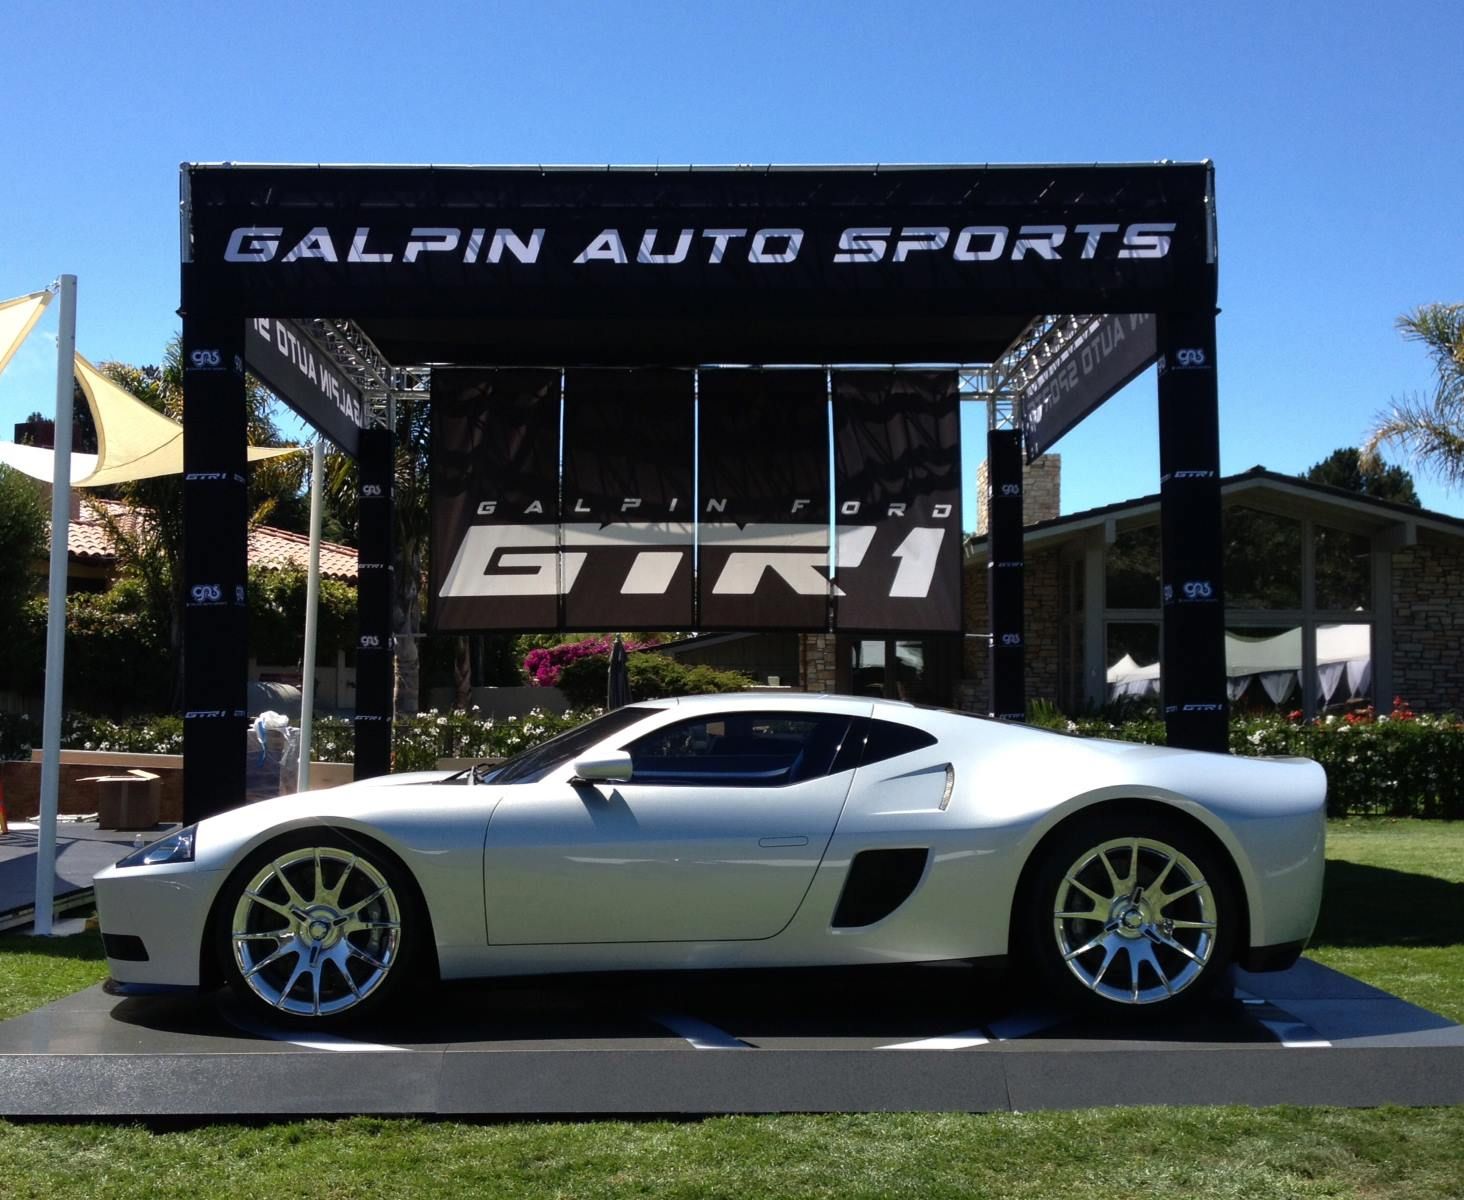 2013 Galpin GTR1 